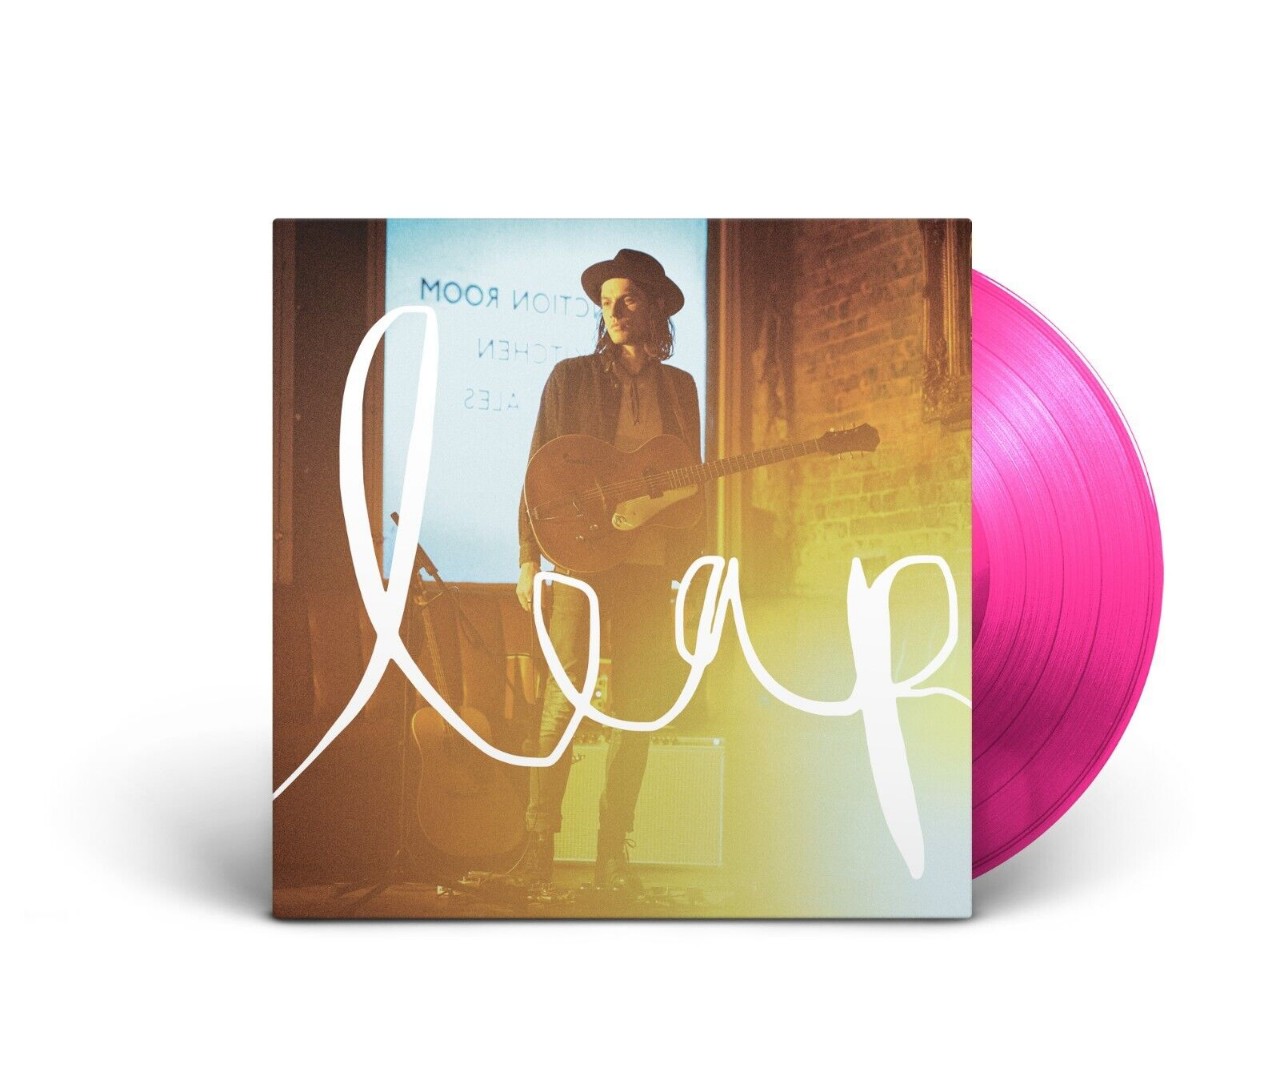 James Bay - Leap (Limited Pink Vinyl)